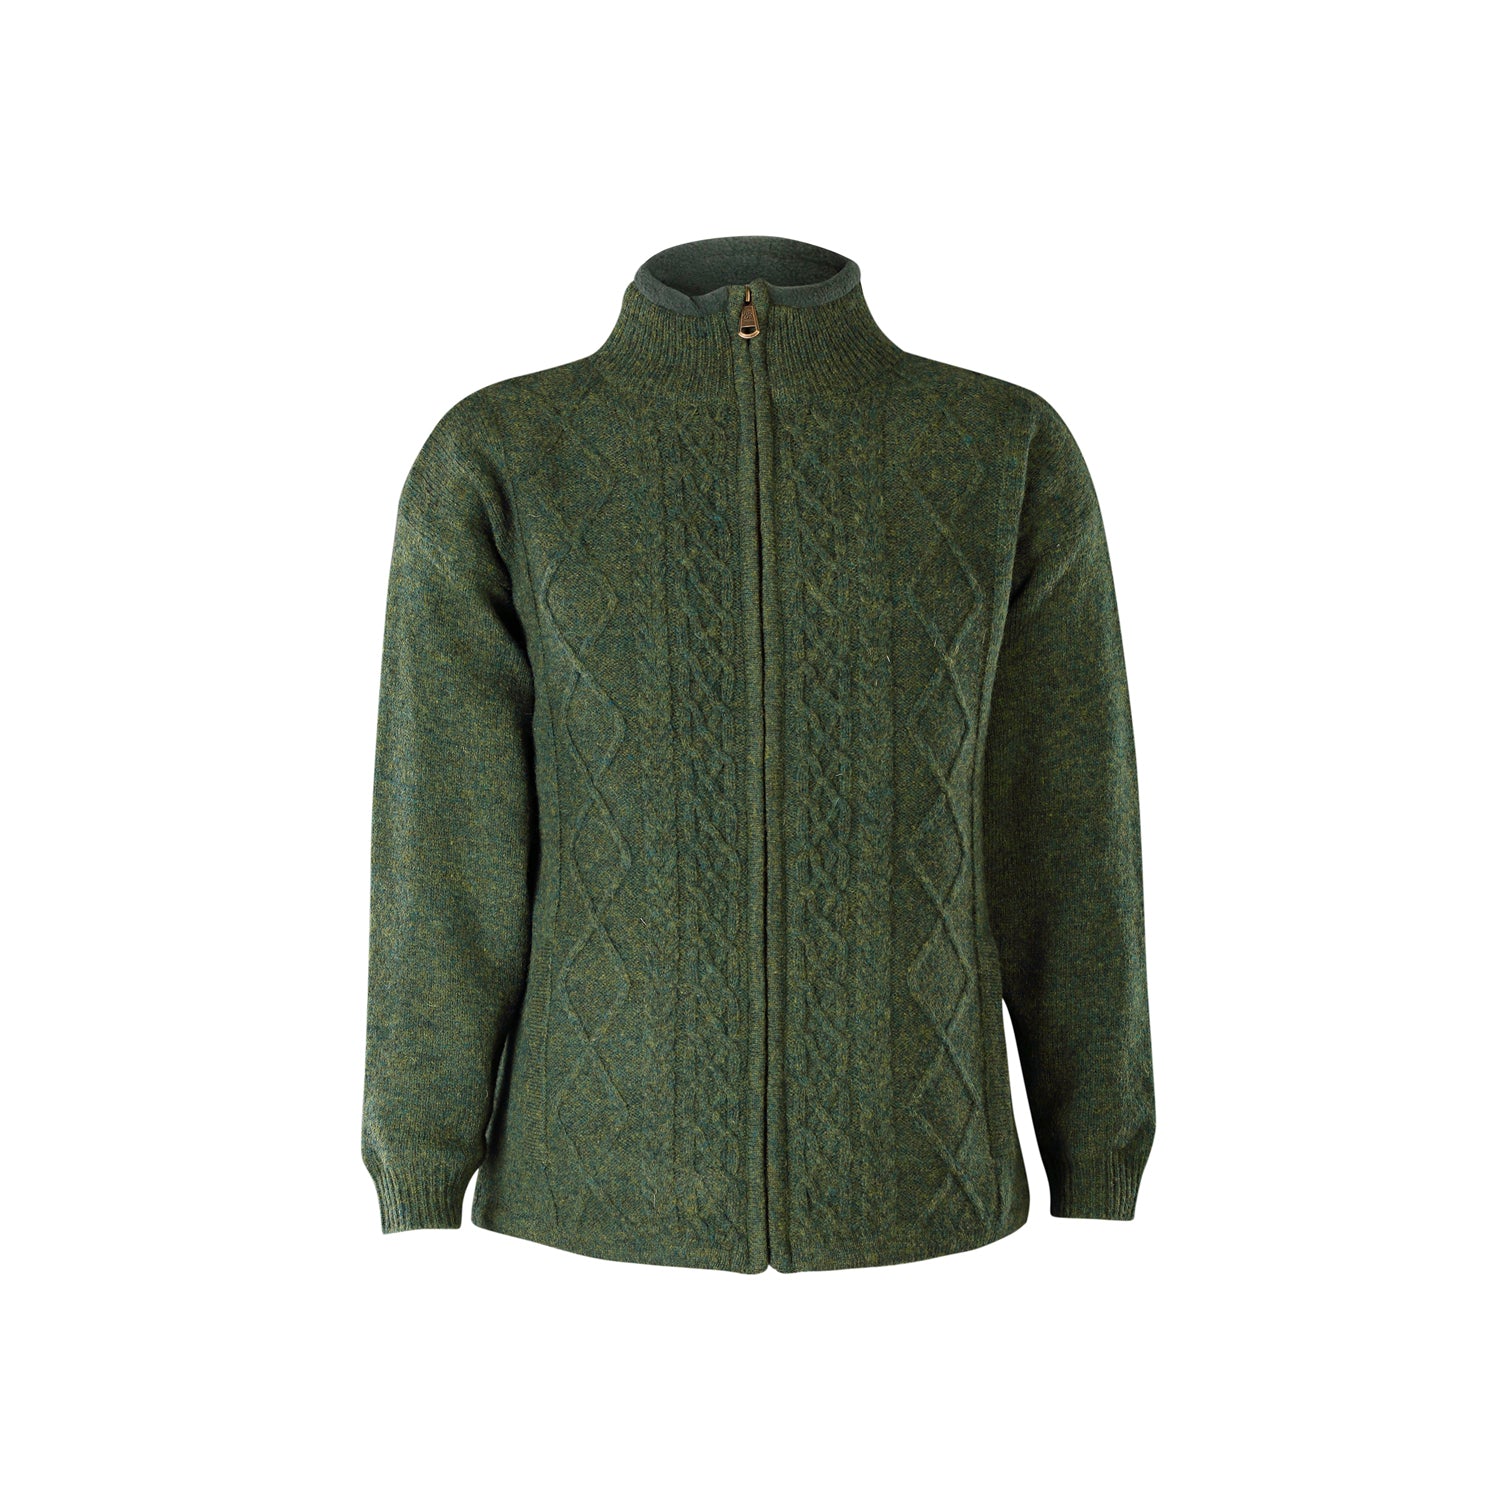 Lined Full Zip Neck Sweater, Moss Green